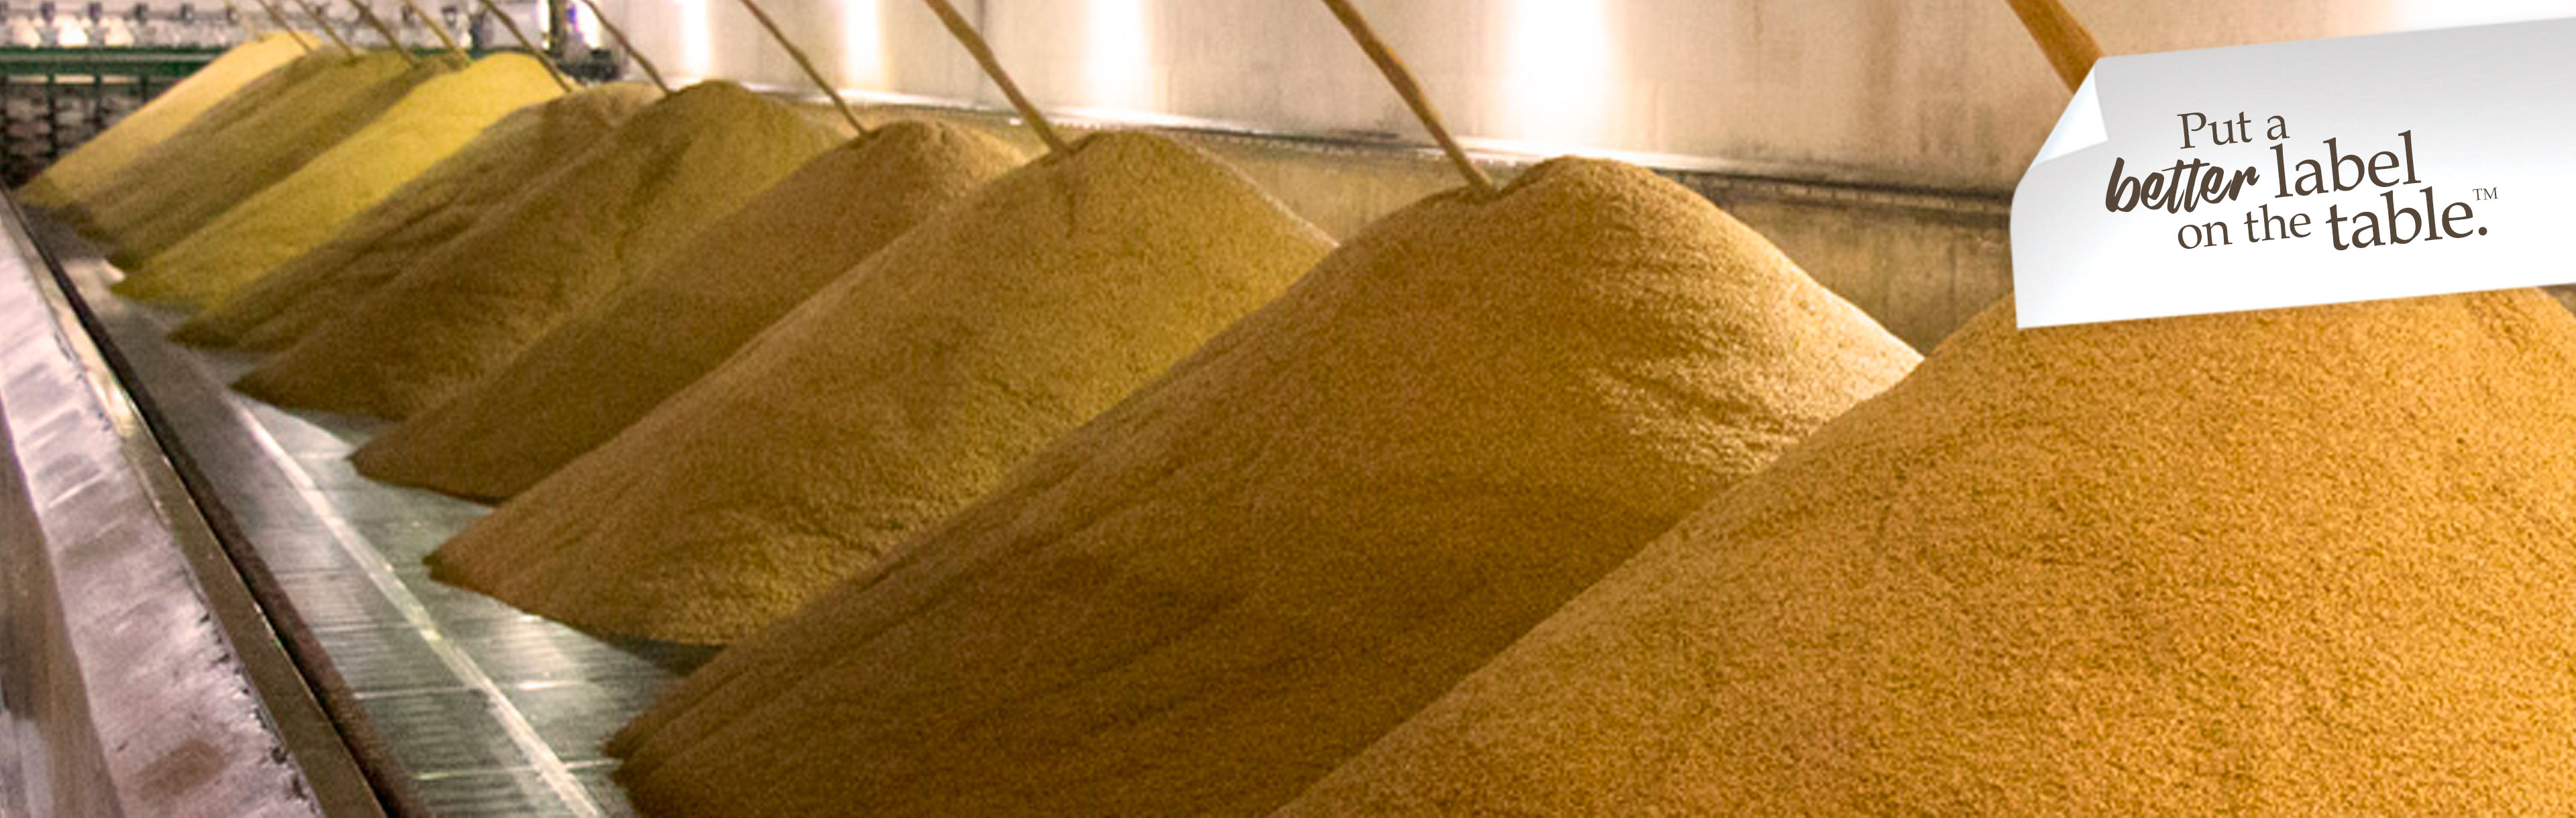 CBW Golden Light DME Dry Malted Barley Extract 227 g Briess Malt 0.5 lb 